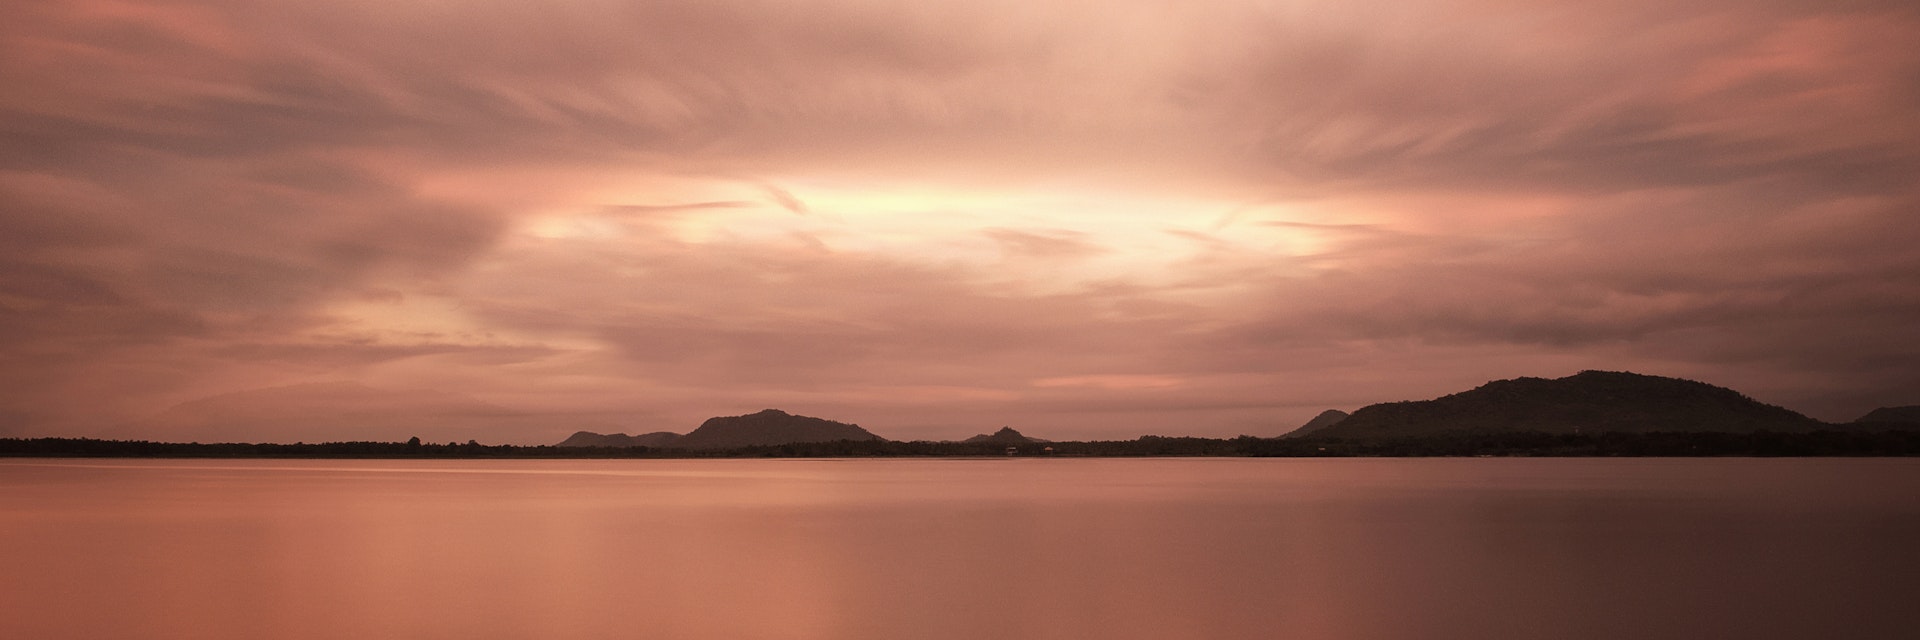 Artificial lake Tissa Wewa with clouds and long time exposure, Hambantota District, Tissamaharama, Sri Lanka